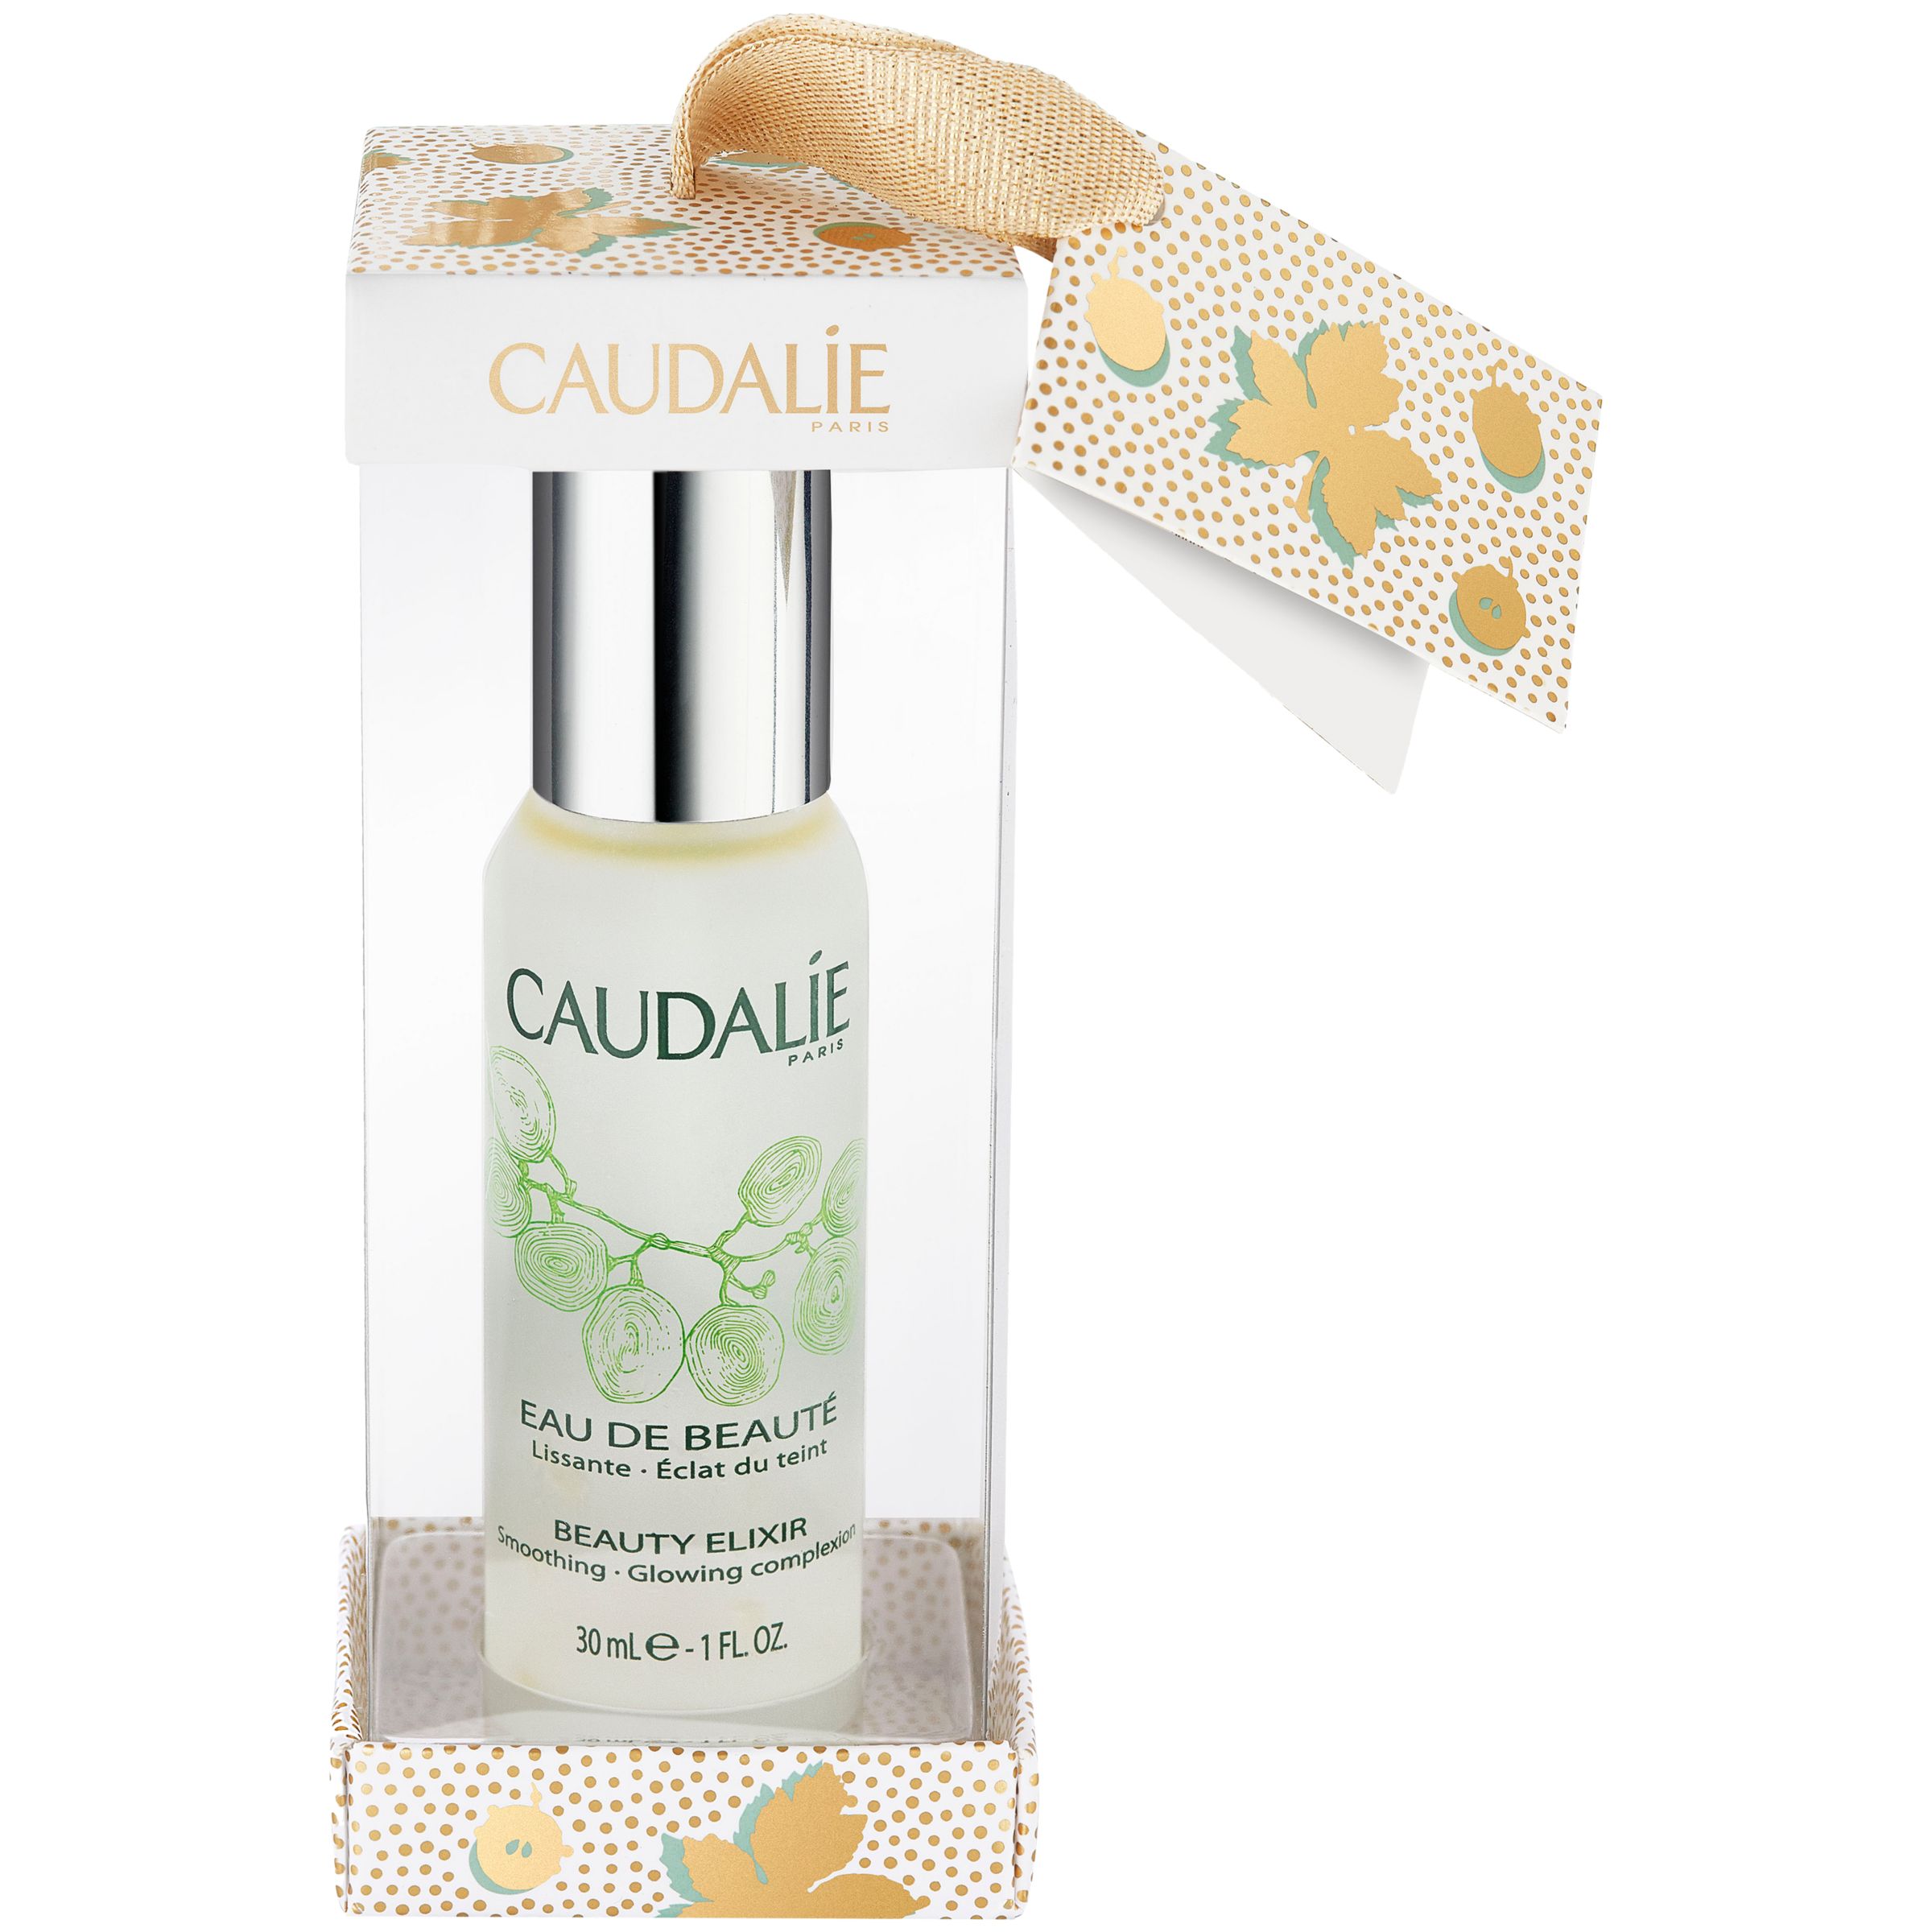 Caudalie Beauty Elixir Bauble, 30ml